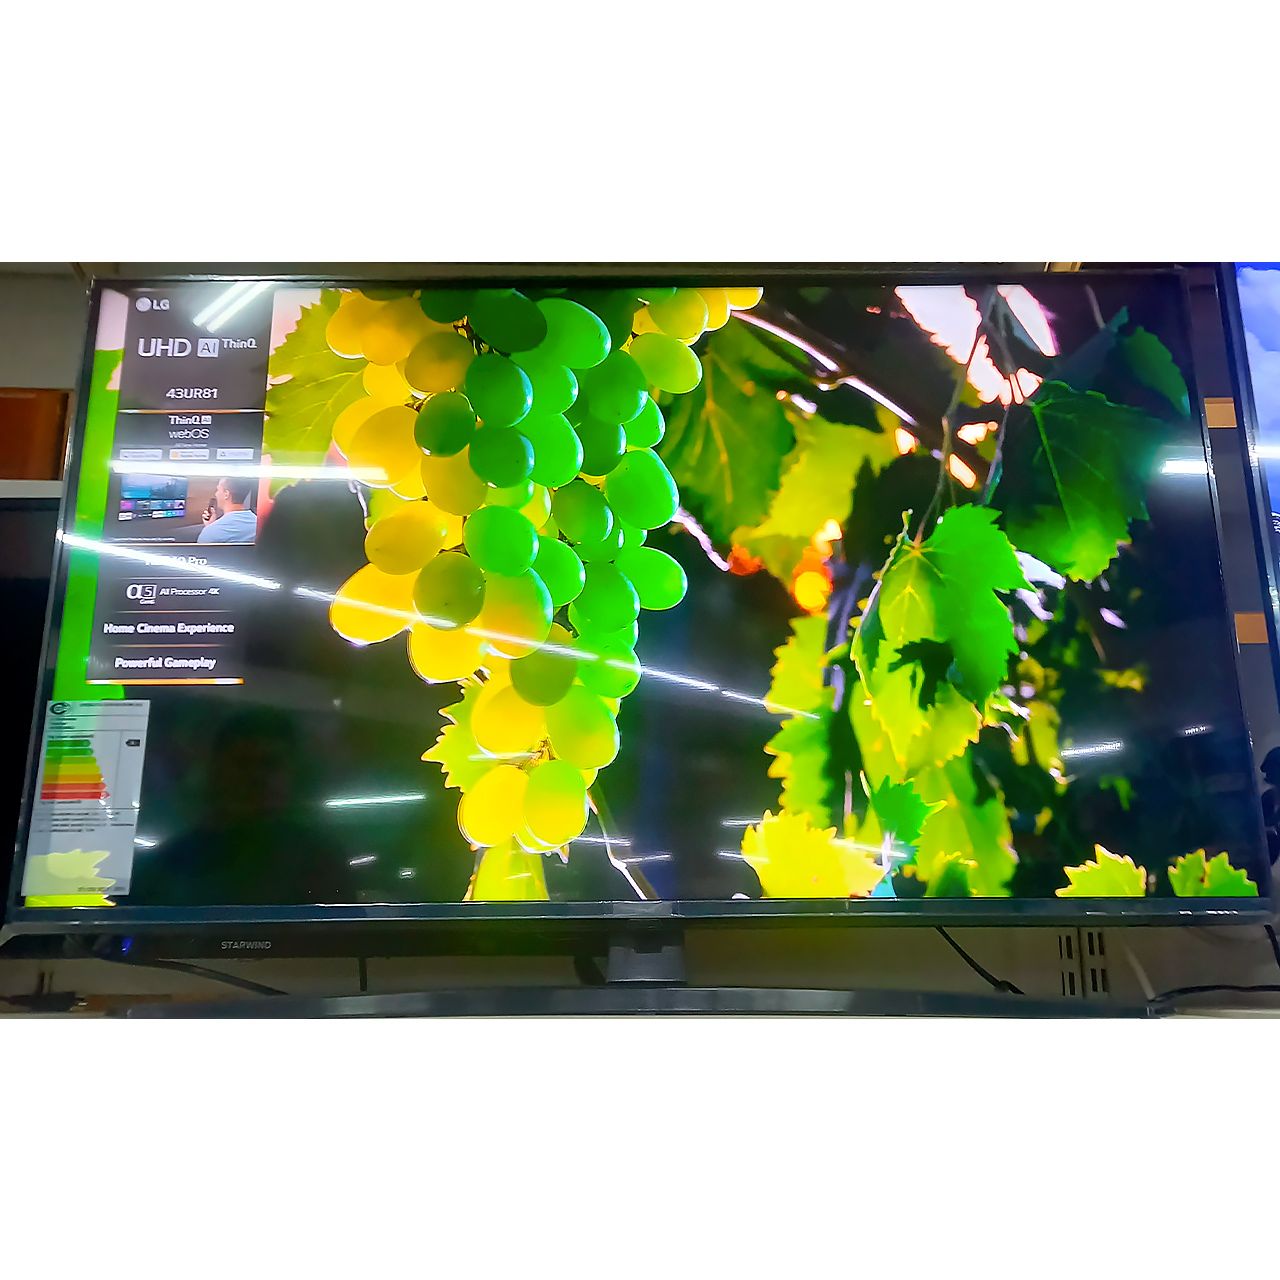 Телевизор LG 4K UHD 110 см